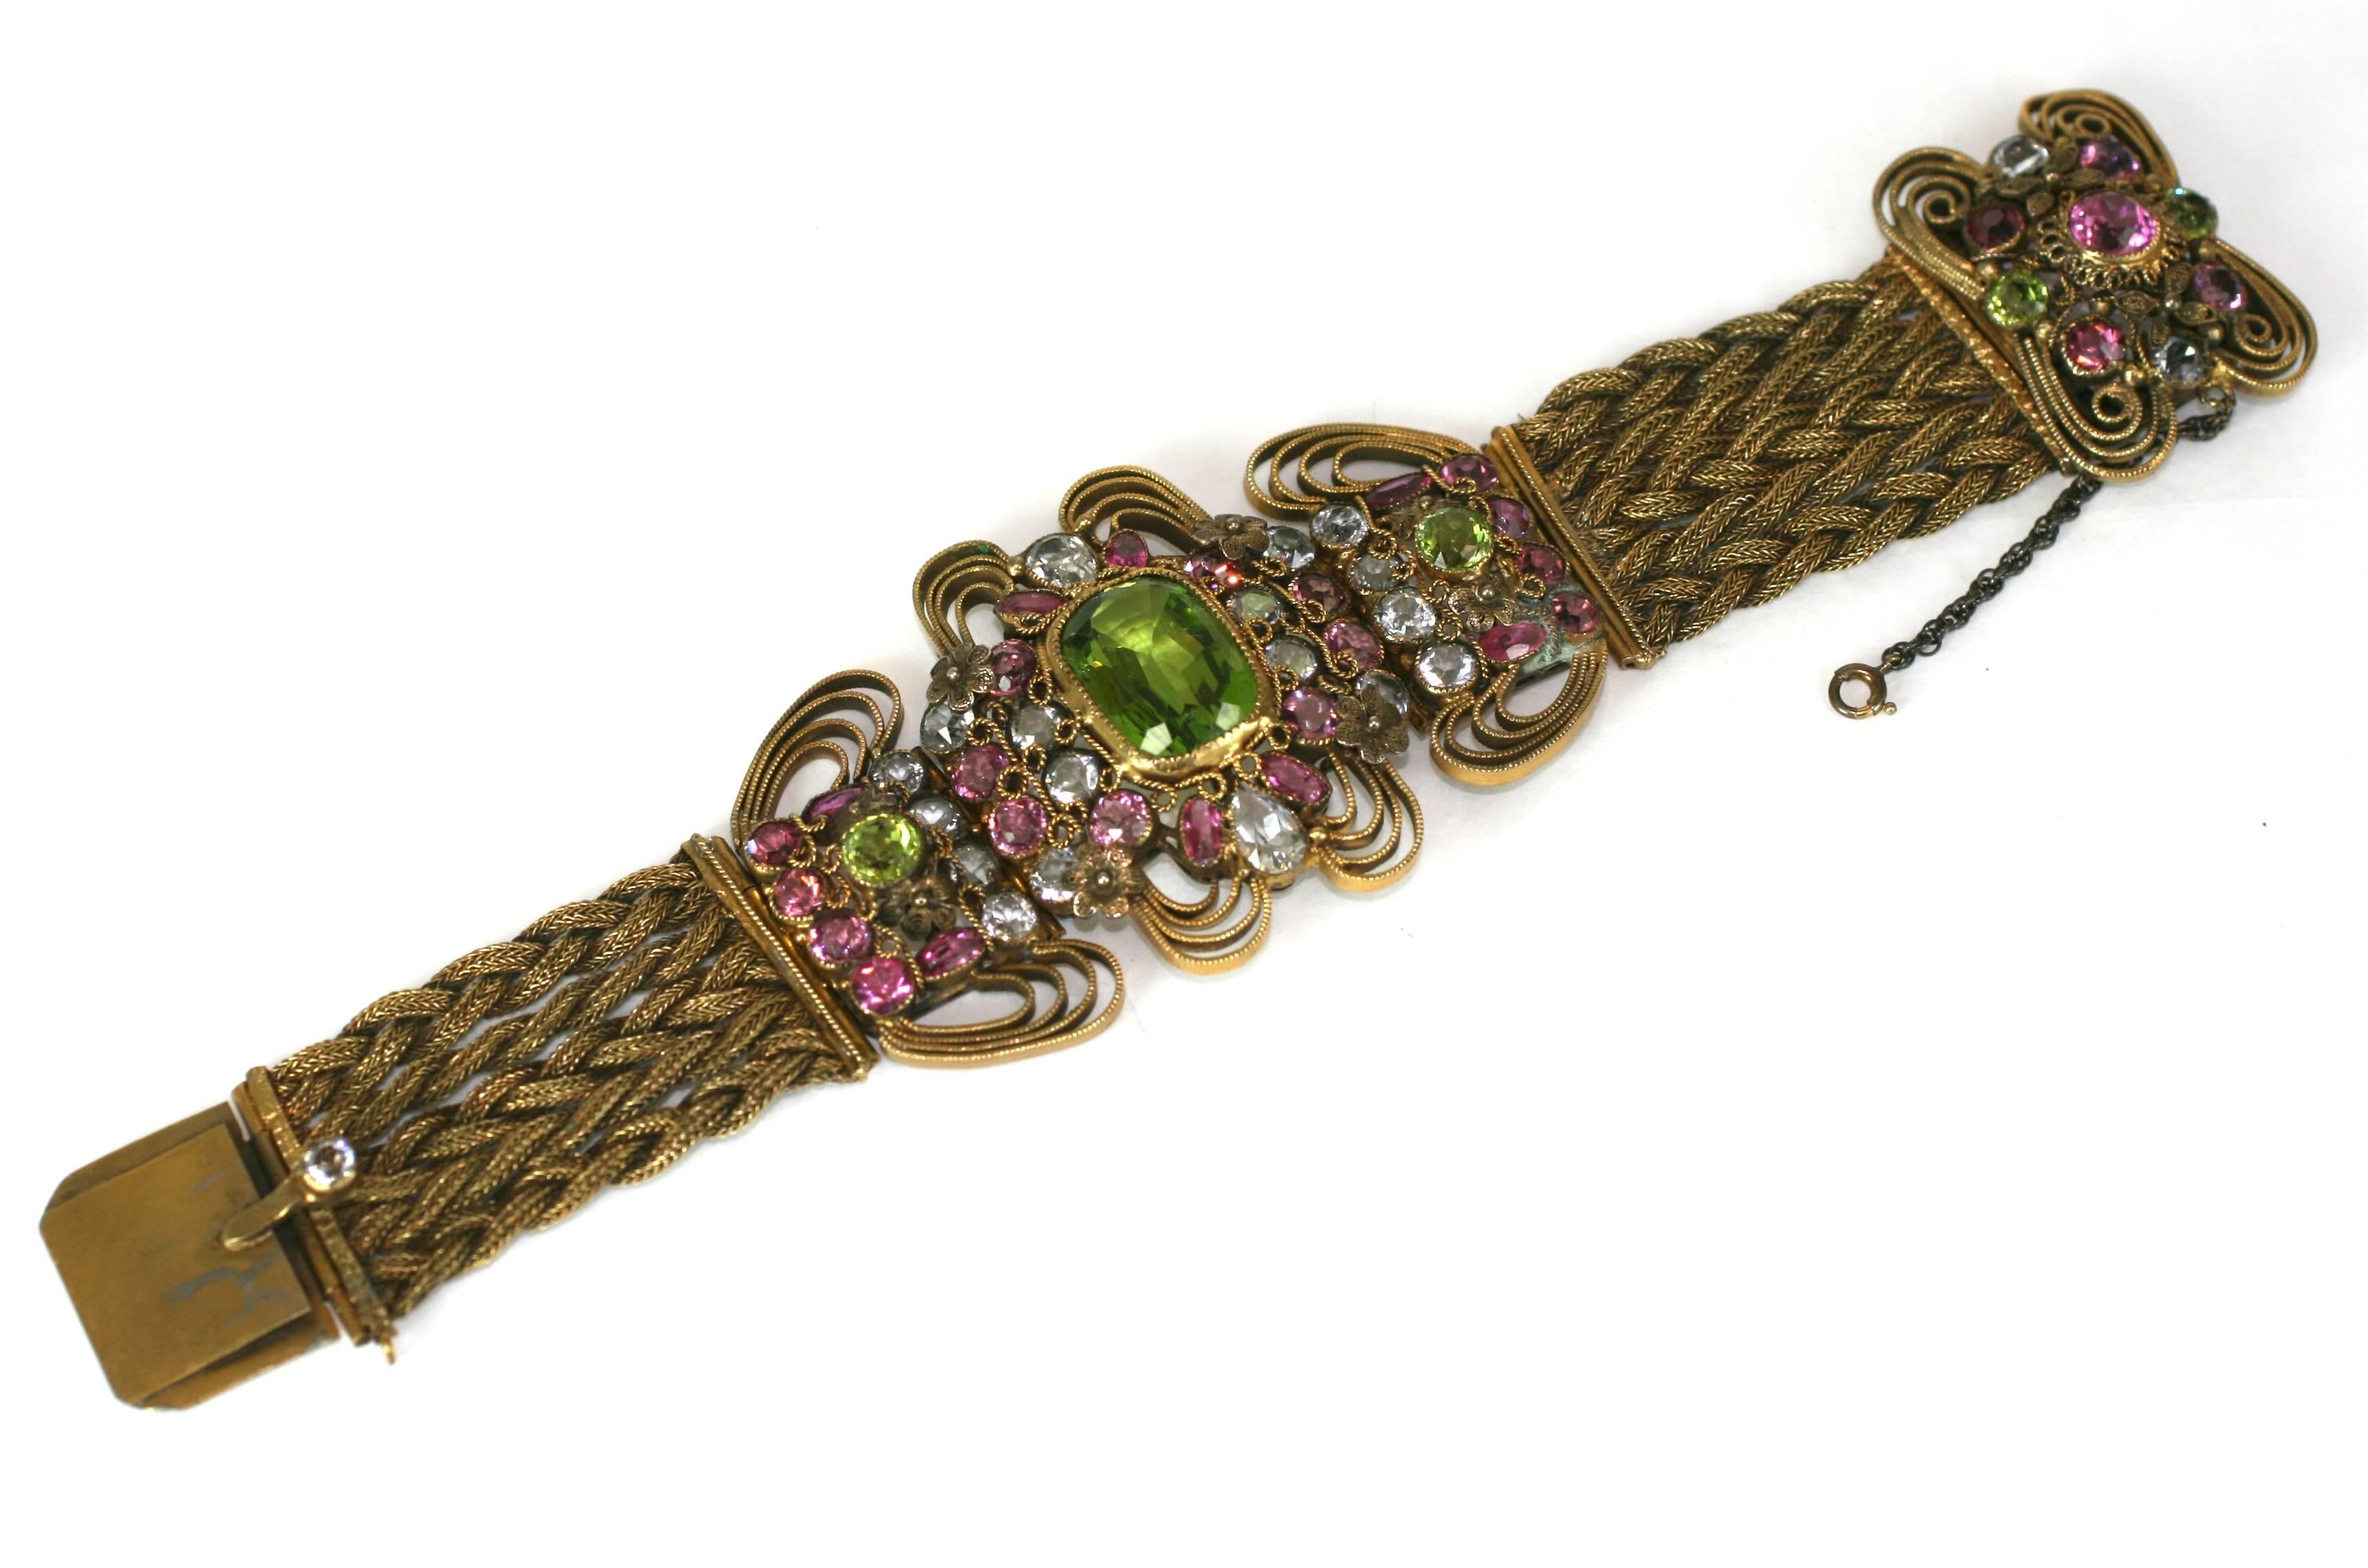 jeweled bracelets